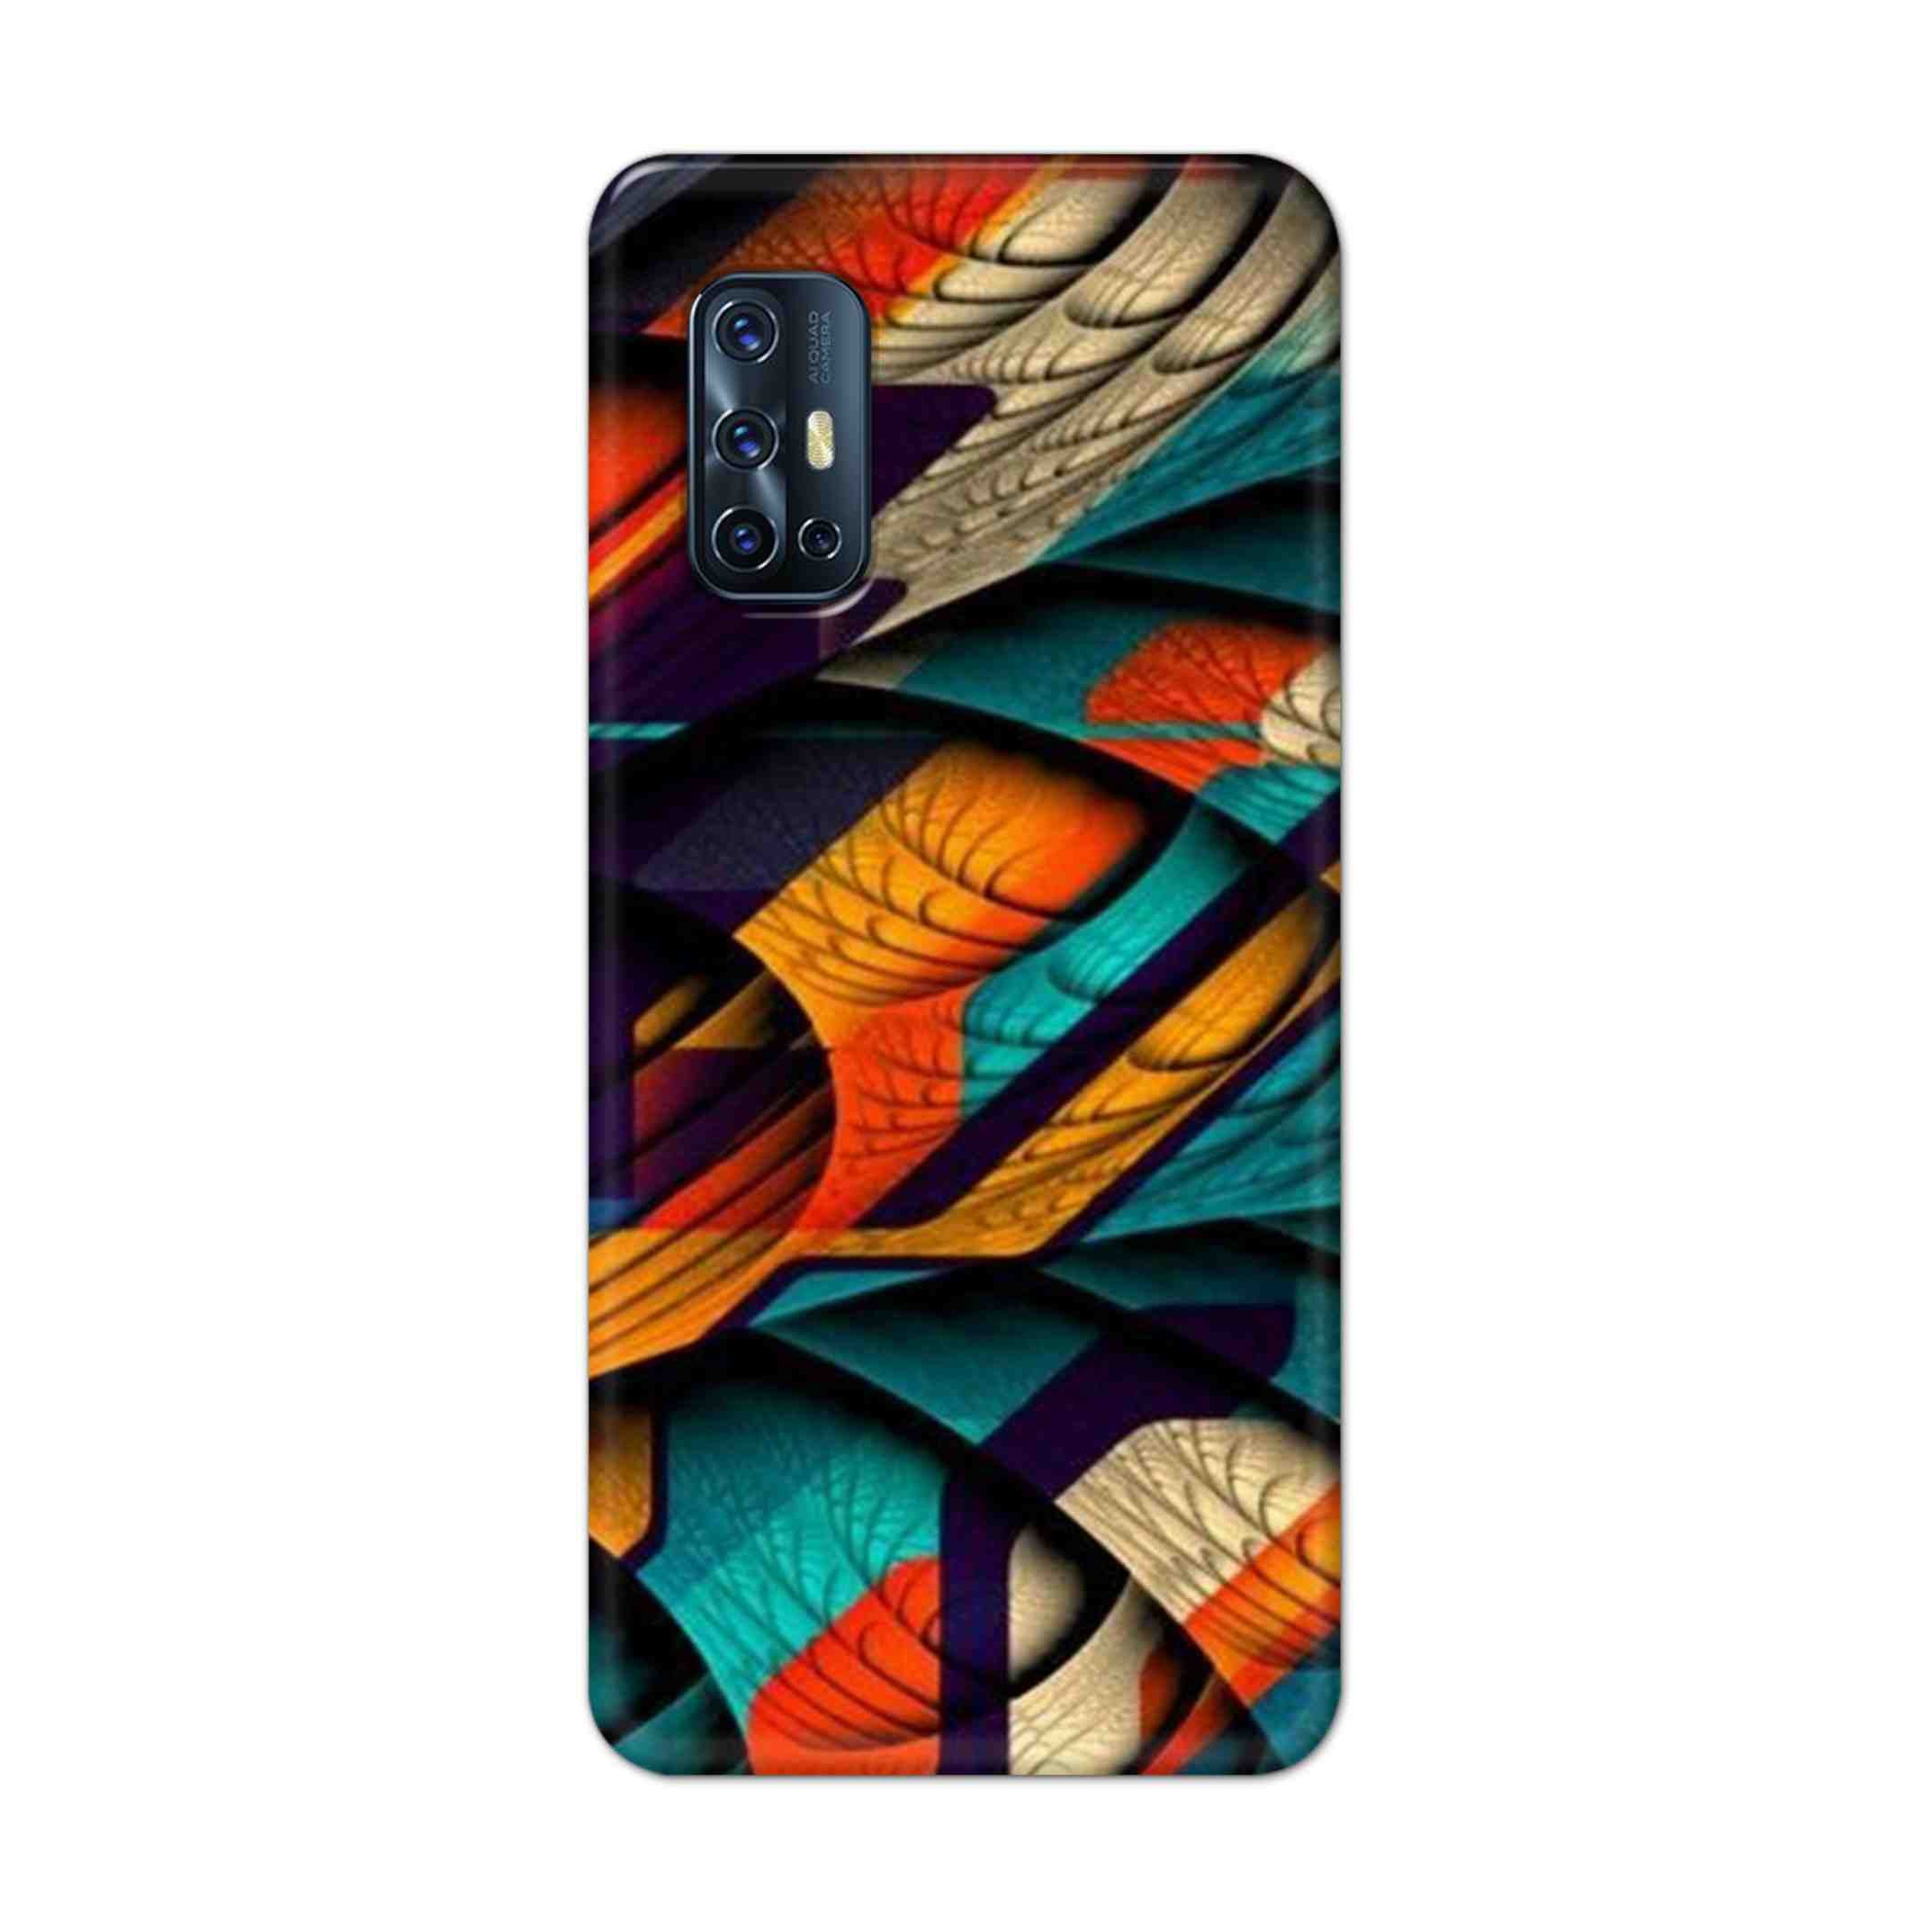 Buy Colour Abstract Hard Back Mobile Phone Case Cover For Vivo V17 Online